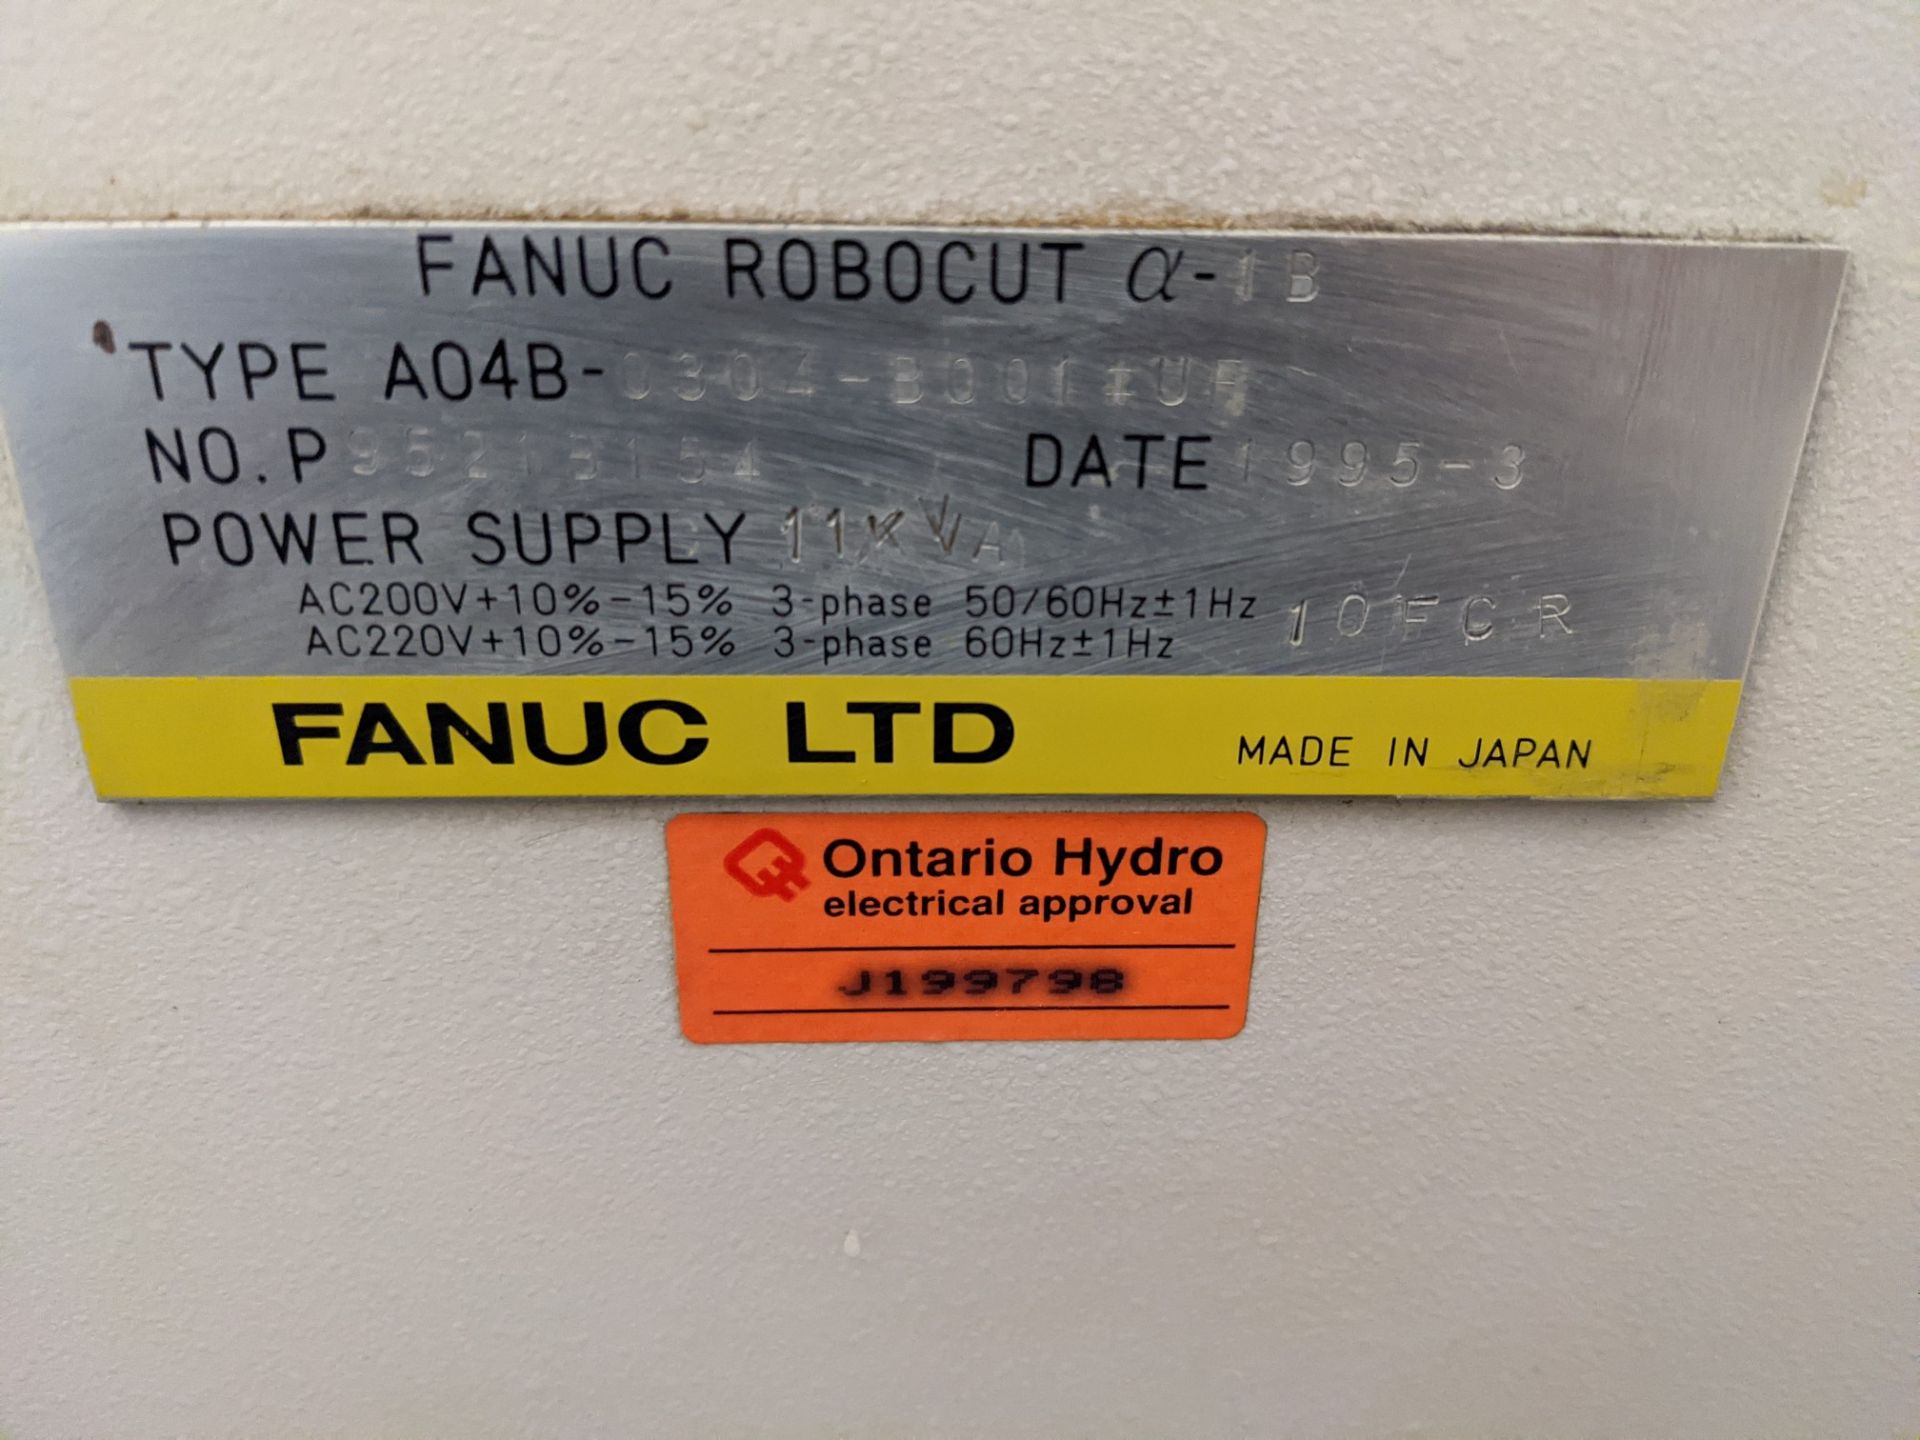 FANUC ROBOCUT ALPHA-1B CNC FLUSH WIRE EDM, FANUC SERIES 16-W CNC CONTROL, TYPE A04B-0304-B001#UF, - Image 10 of 10